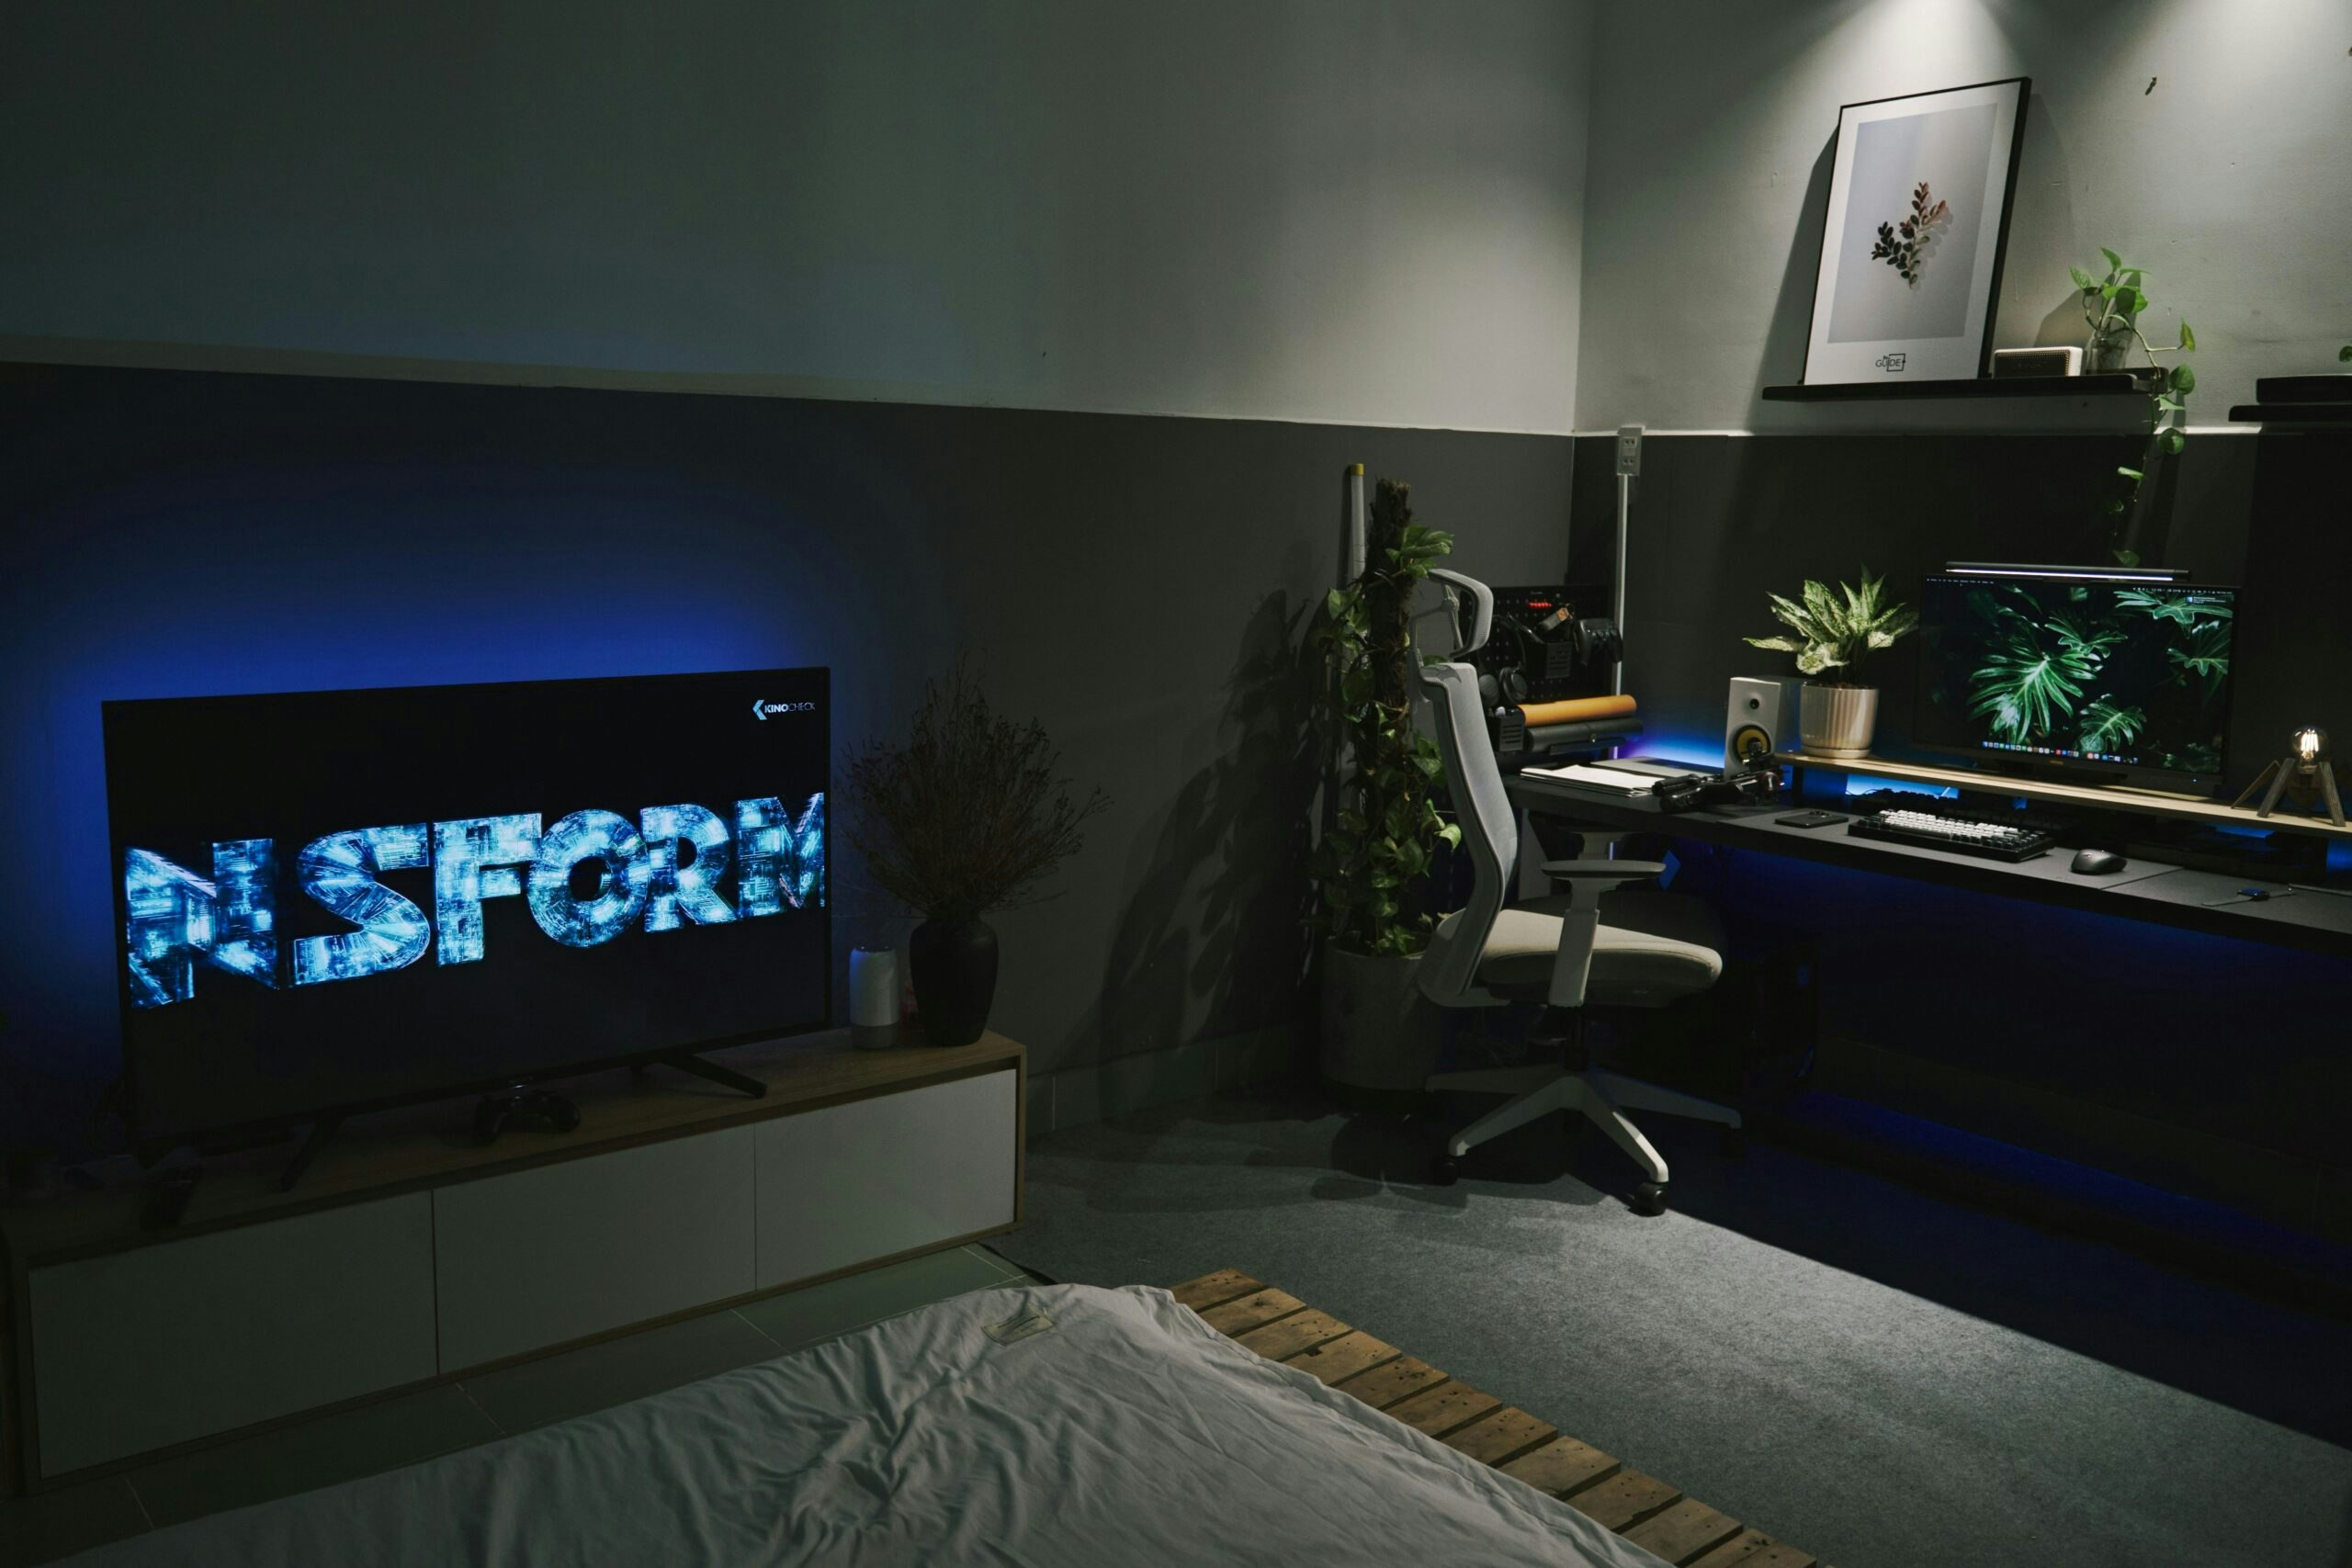 TV in a dark room